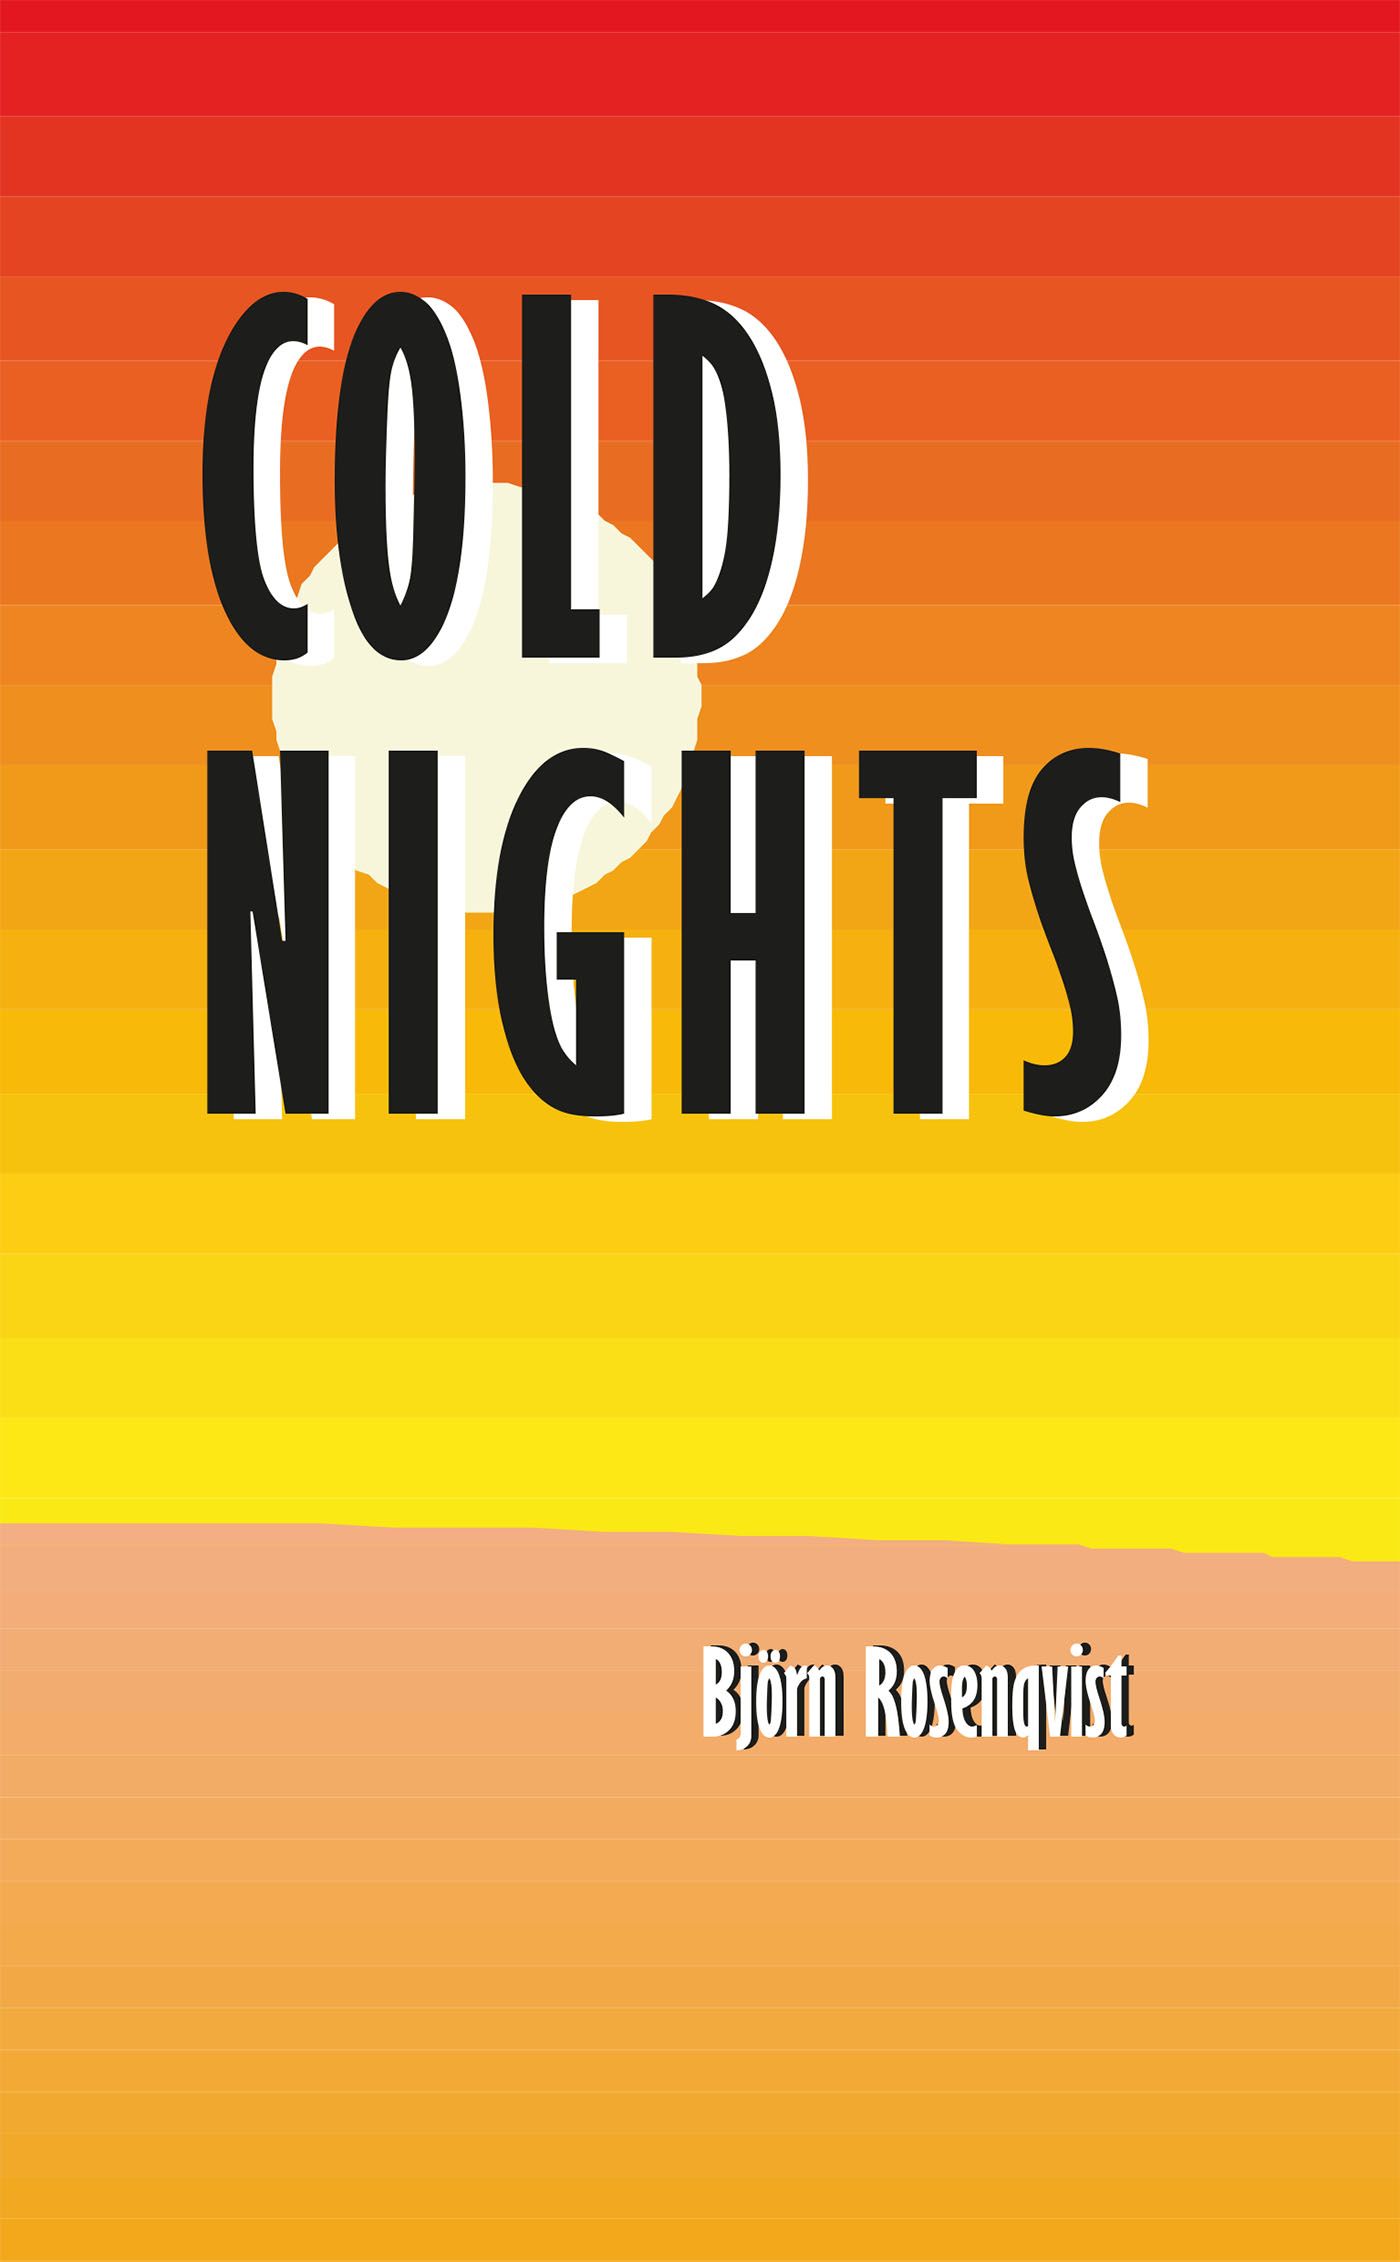 Cold nights, eBook by Björn Rosenqvist